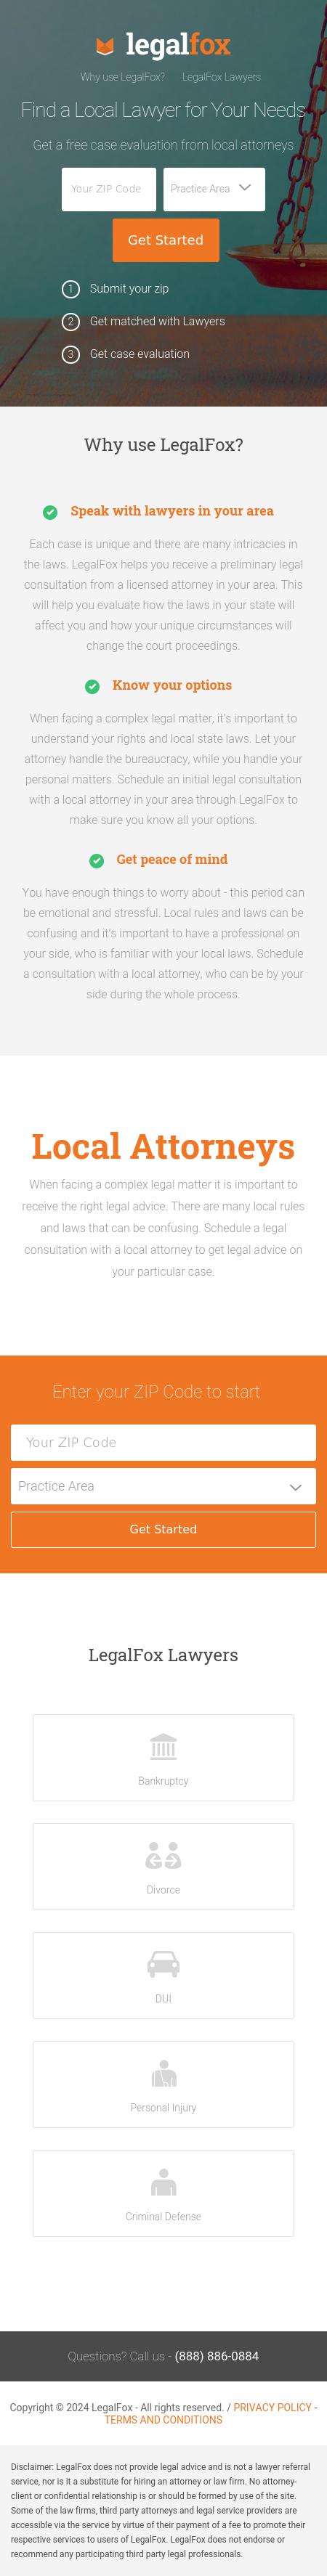 Find a Local Attorney - Oklahoma City OK Lawyers